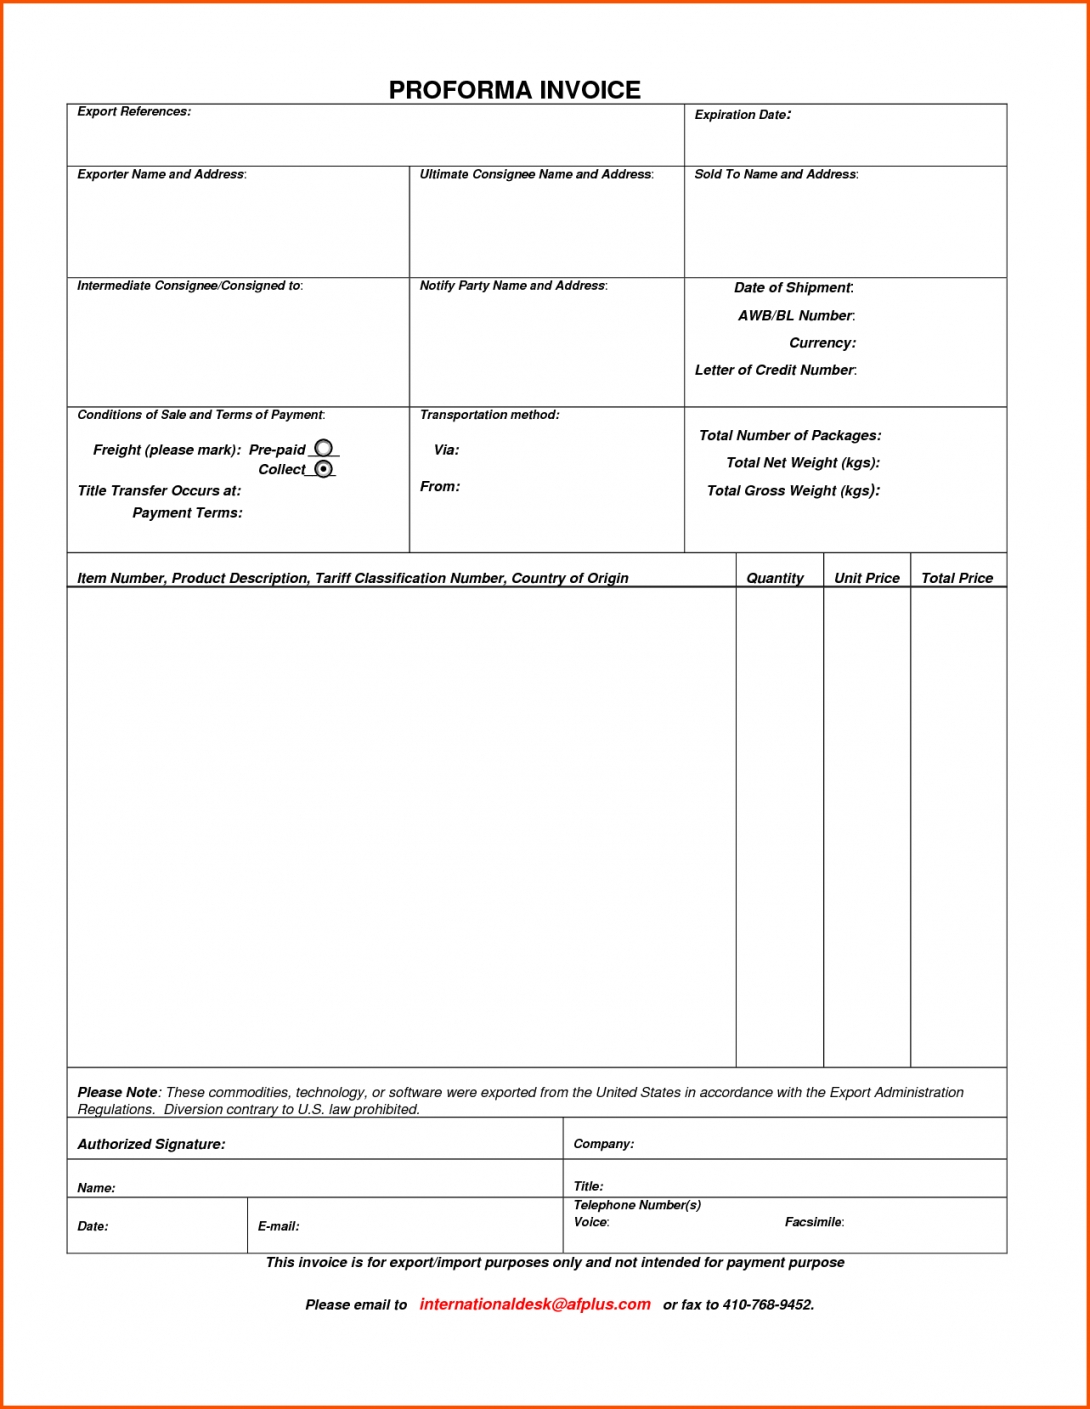 proforma invoice sample for export missersd7 sample proforma invoice for export